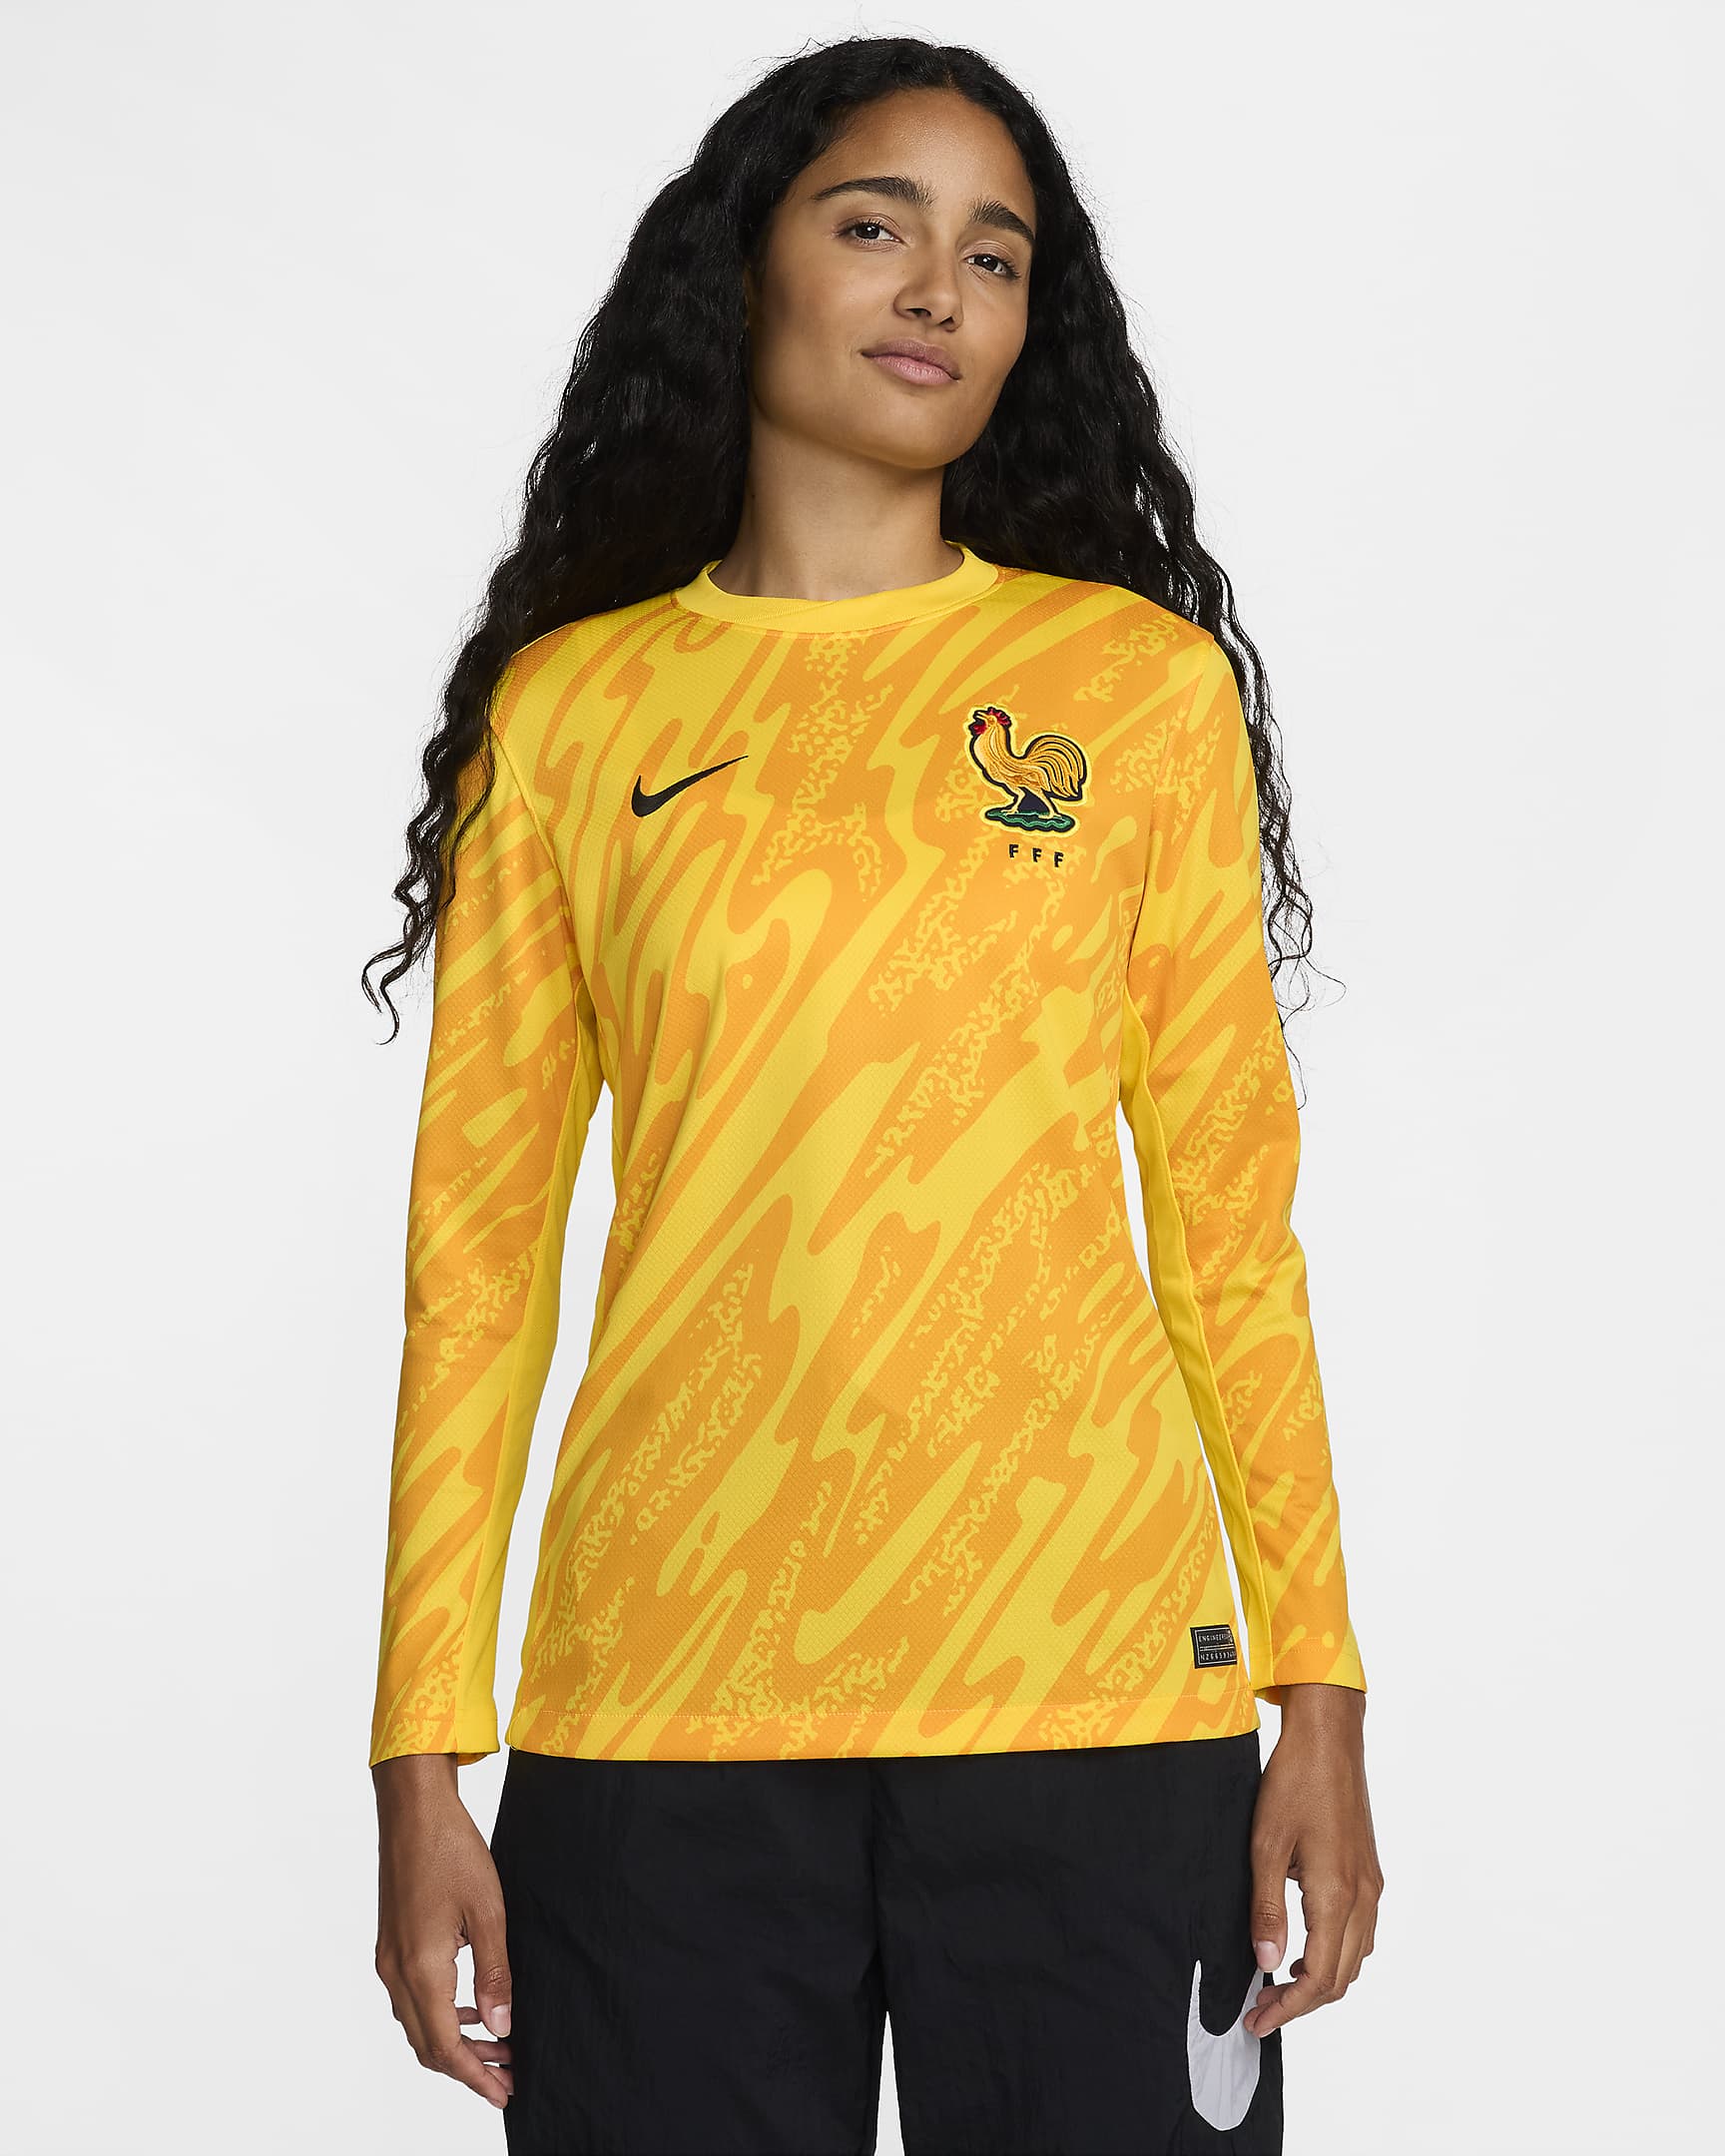 FFF (Women's Team) 2024/25 Stadium Goalkeeper Women's Nike Dri-FIT Football Replica Shirt - Tour Yellow/University Gold/University Gold/Black